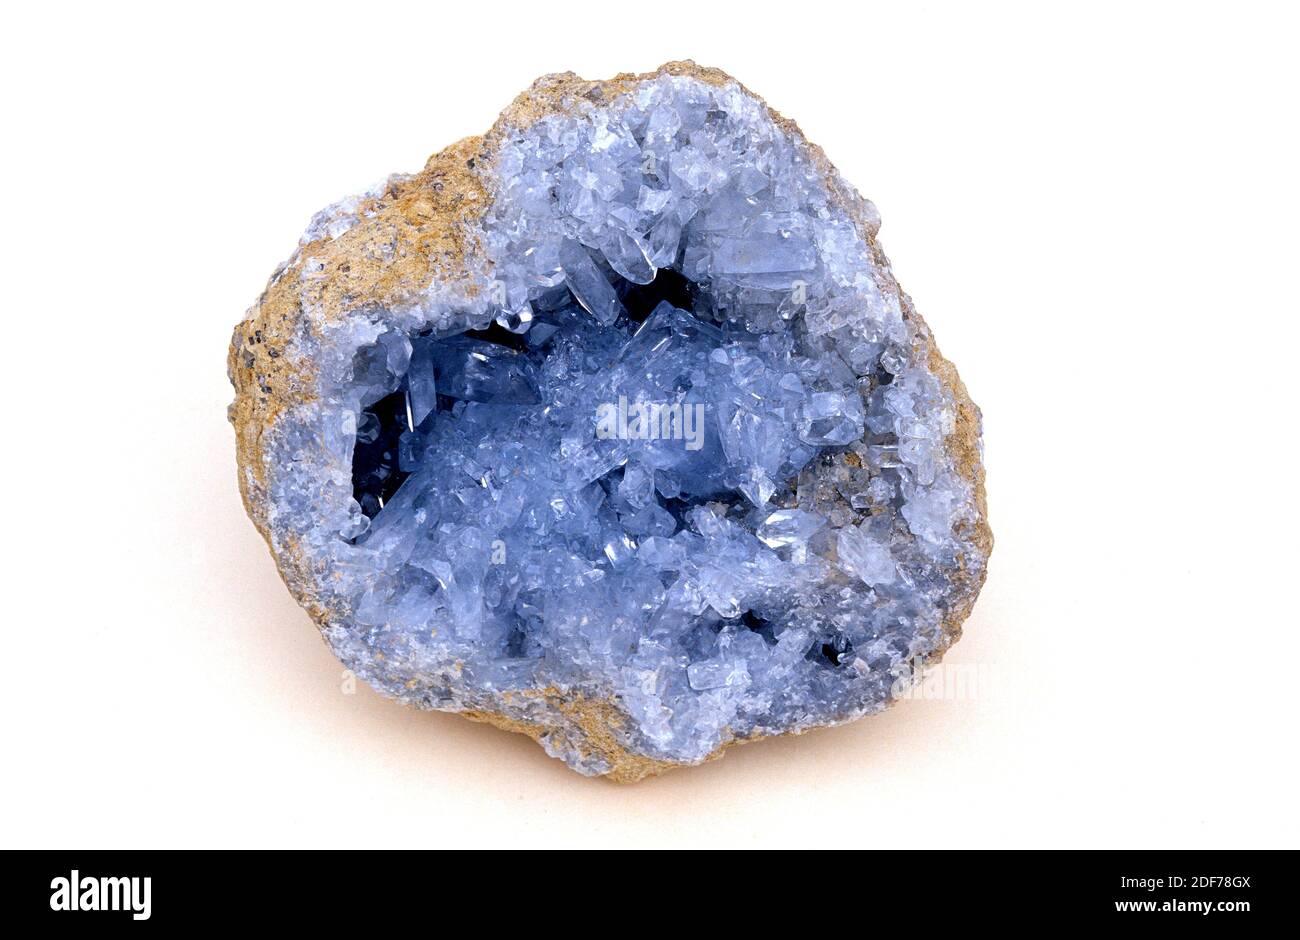 La celestina o celestita es un mineral de sulfato de estroncio. Geode. Foto de stock